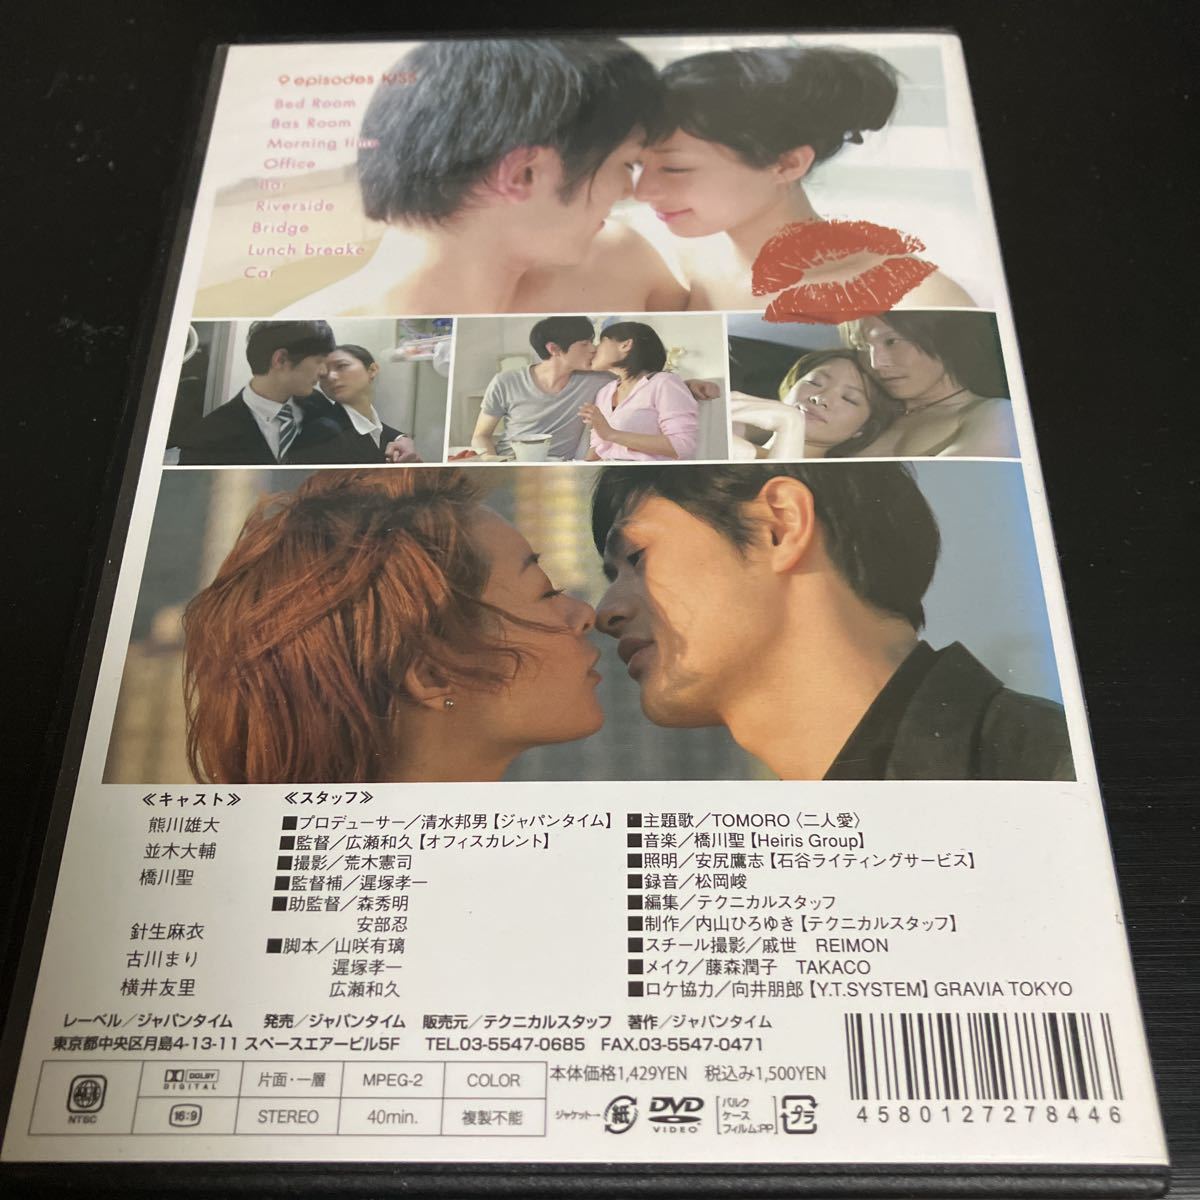 DVD KISSING